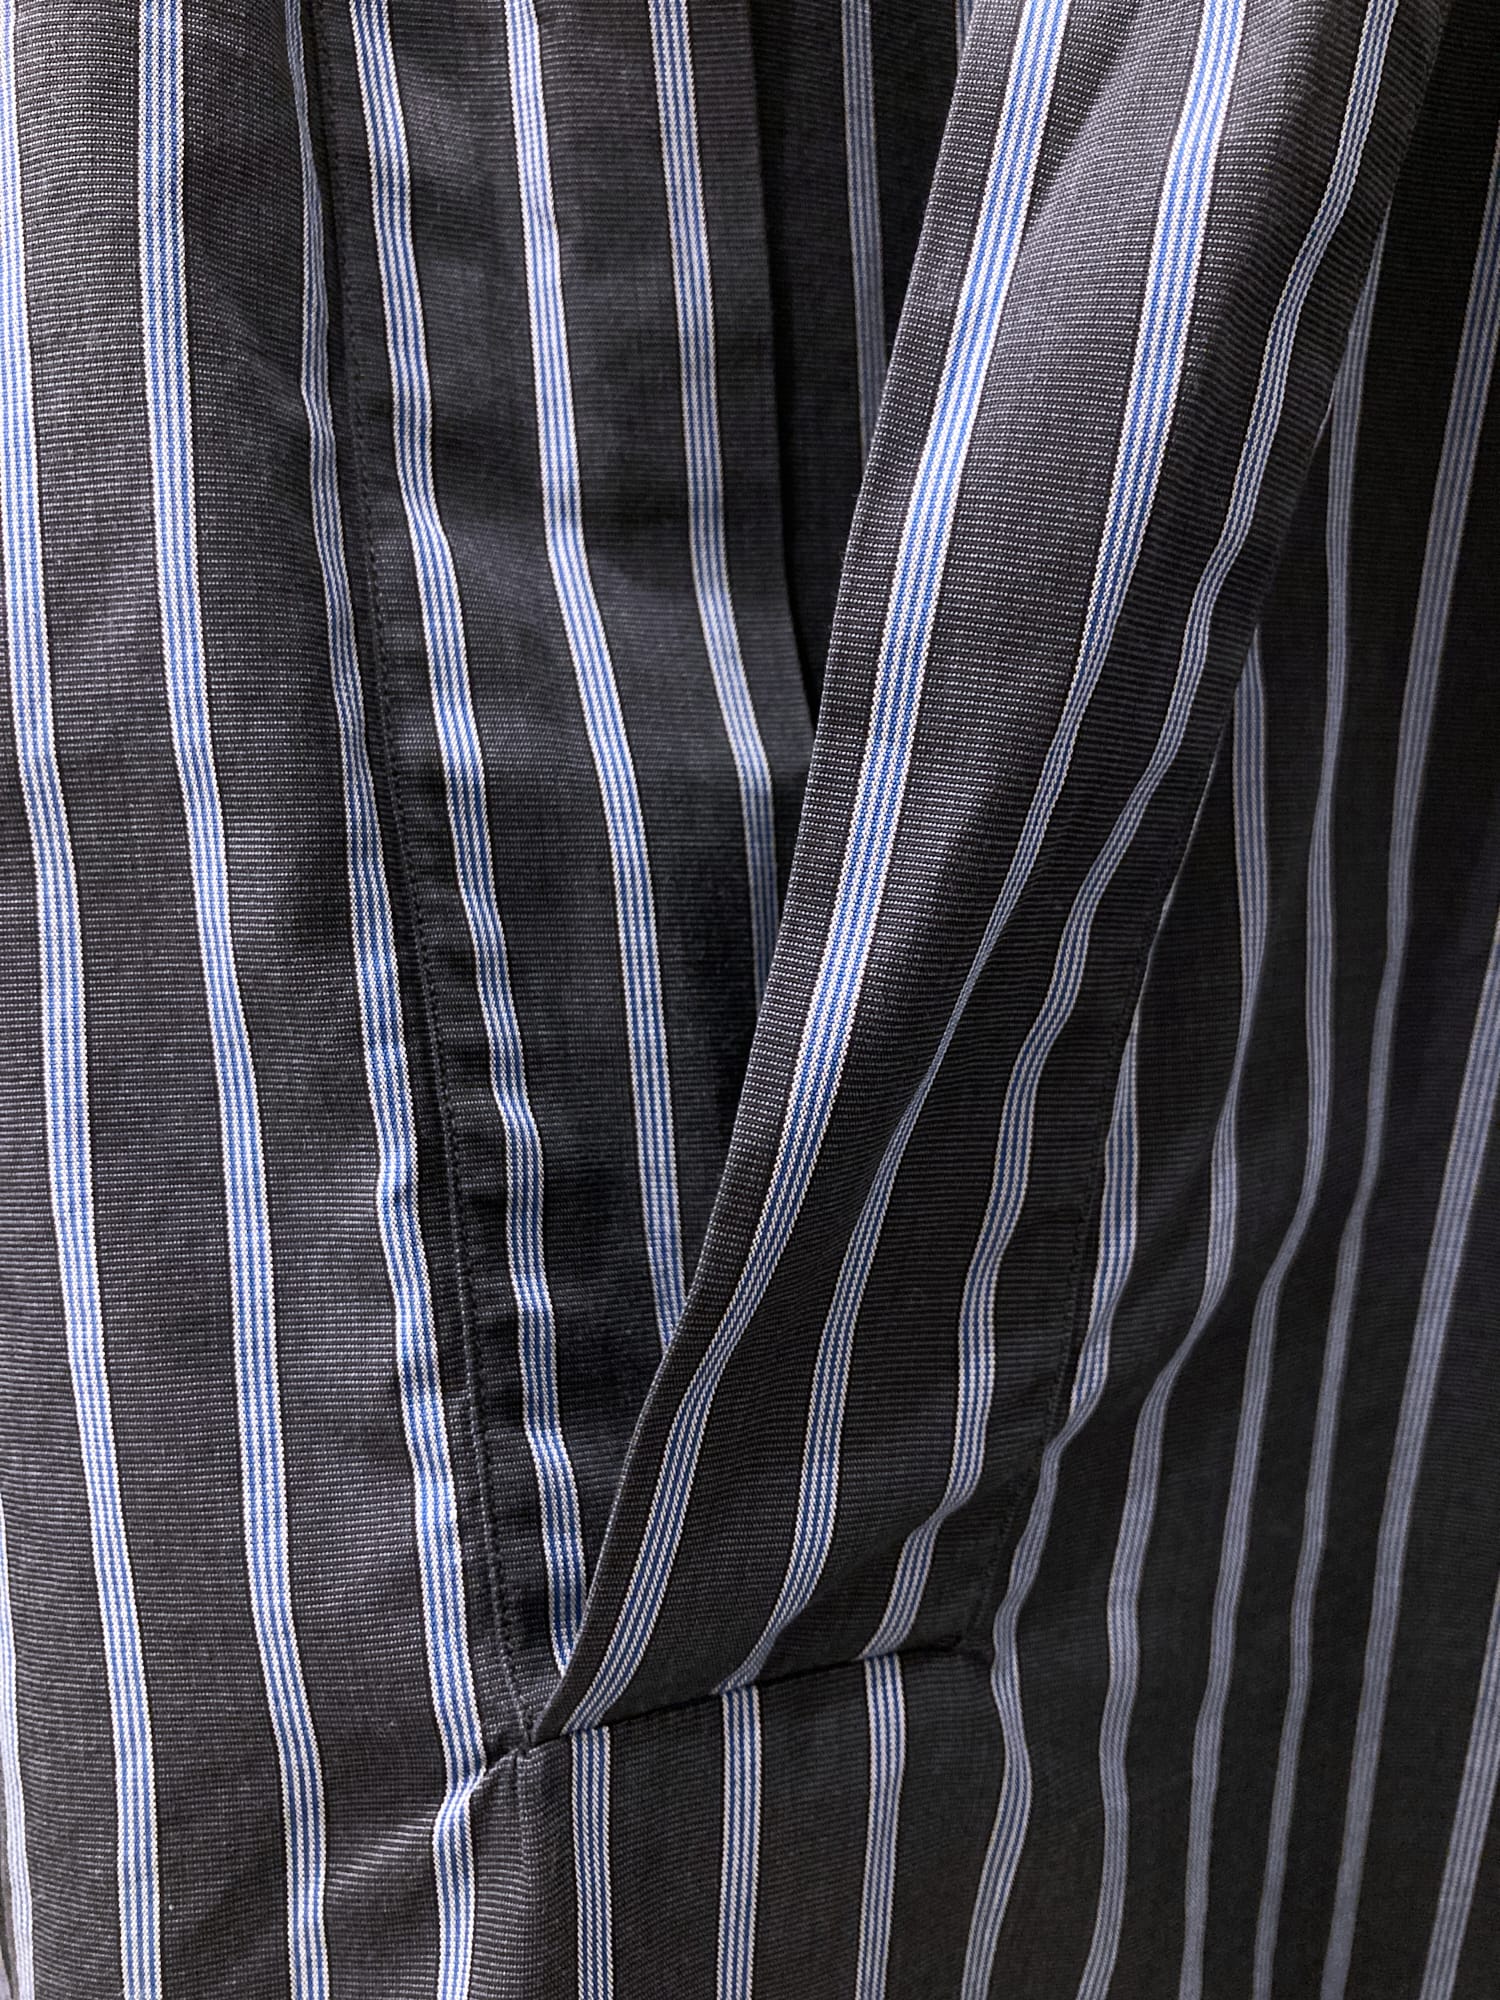 Dirk Bikkembergs spring 1999 dark grey striped open neck short sleeve shirt - M